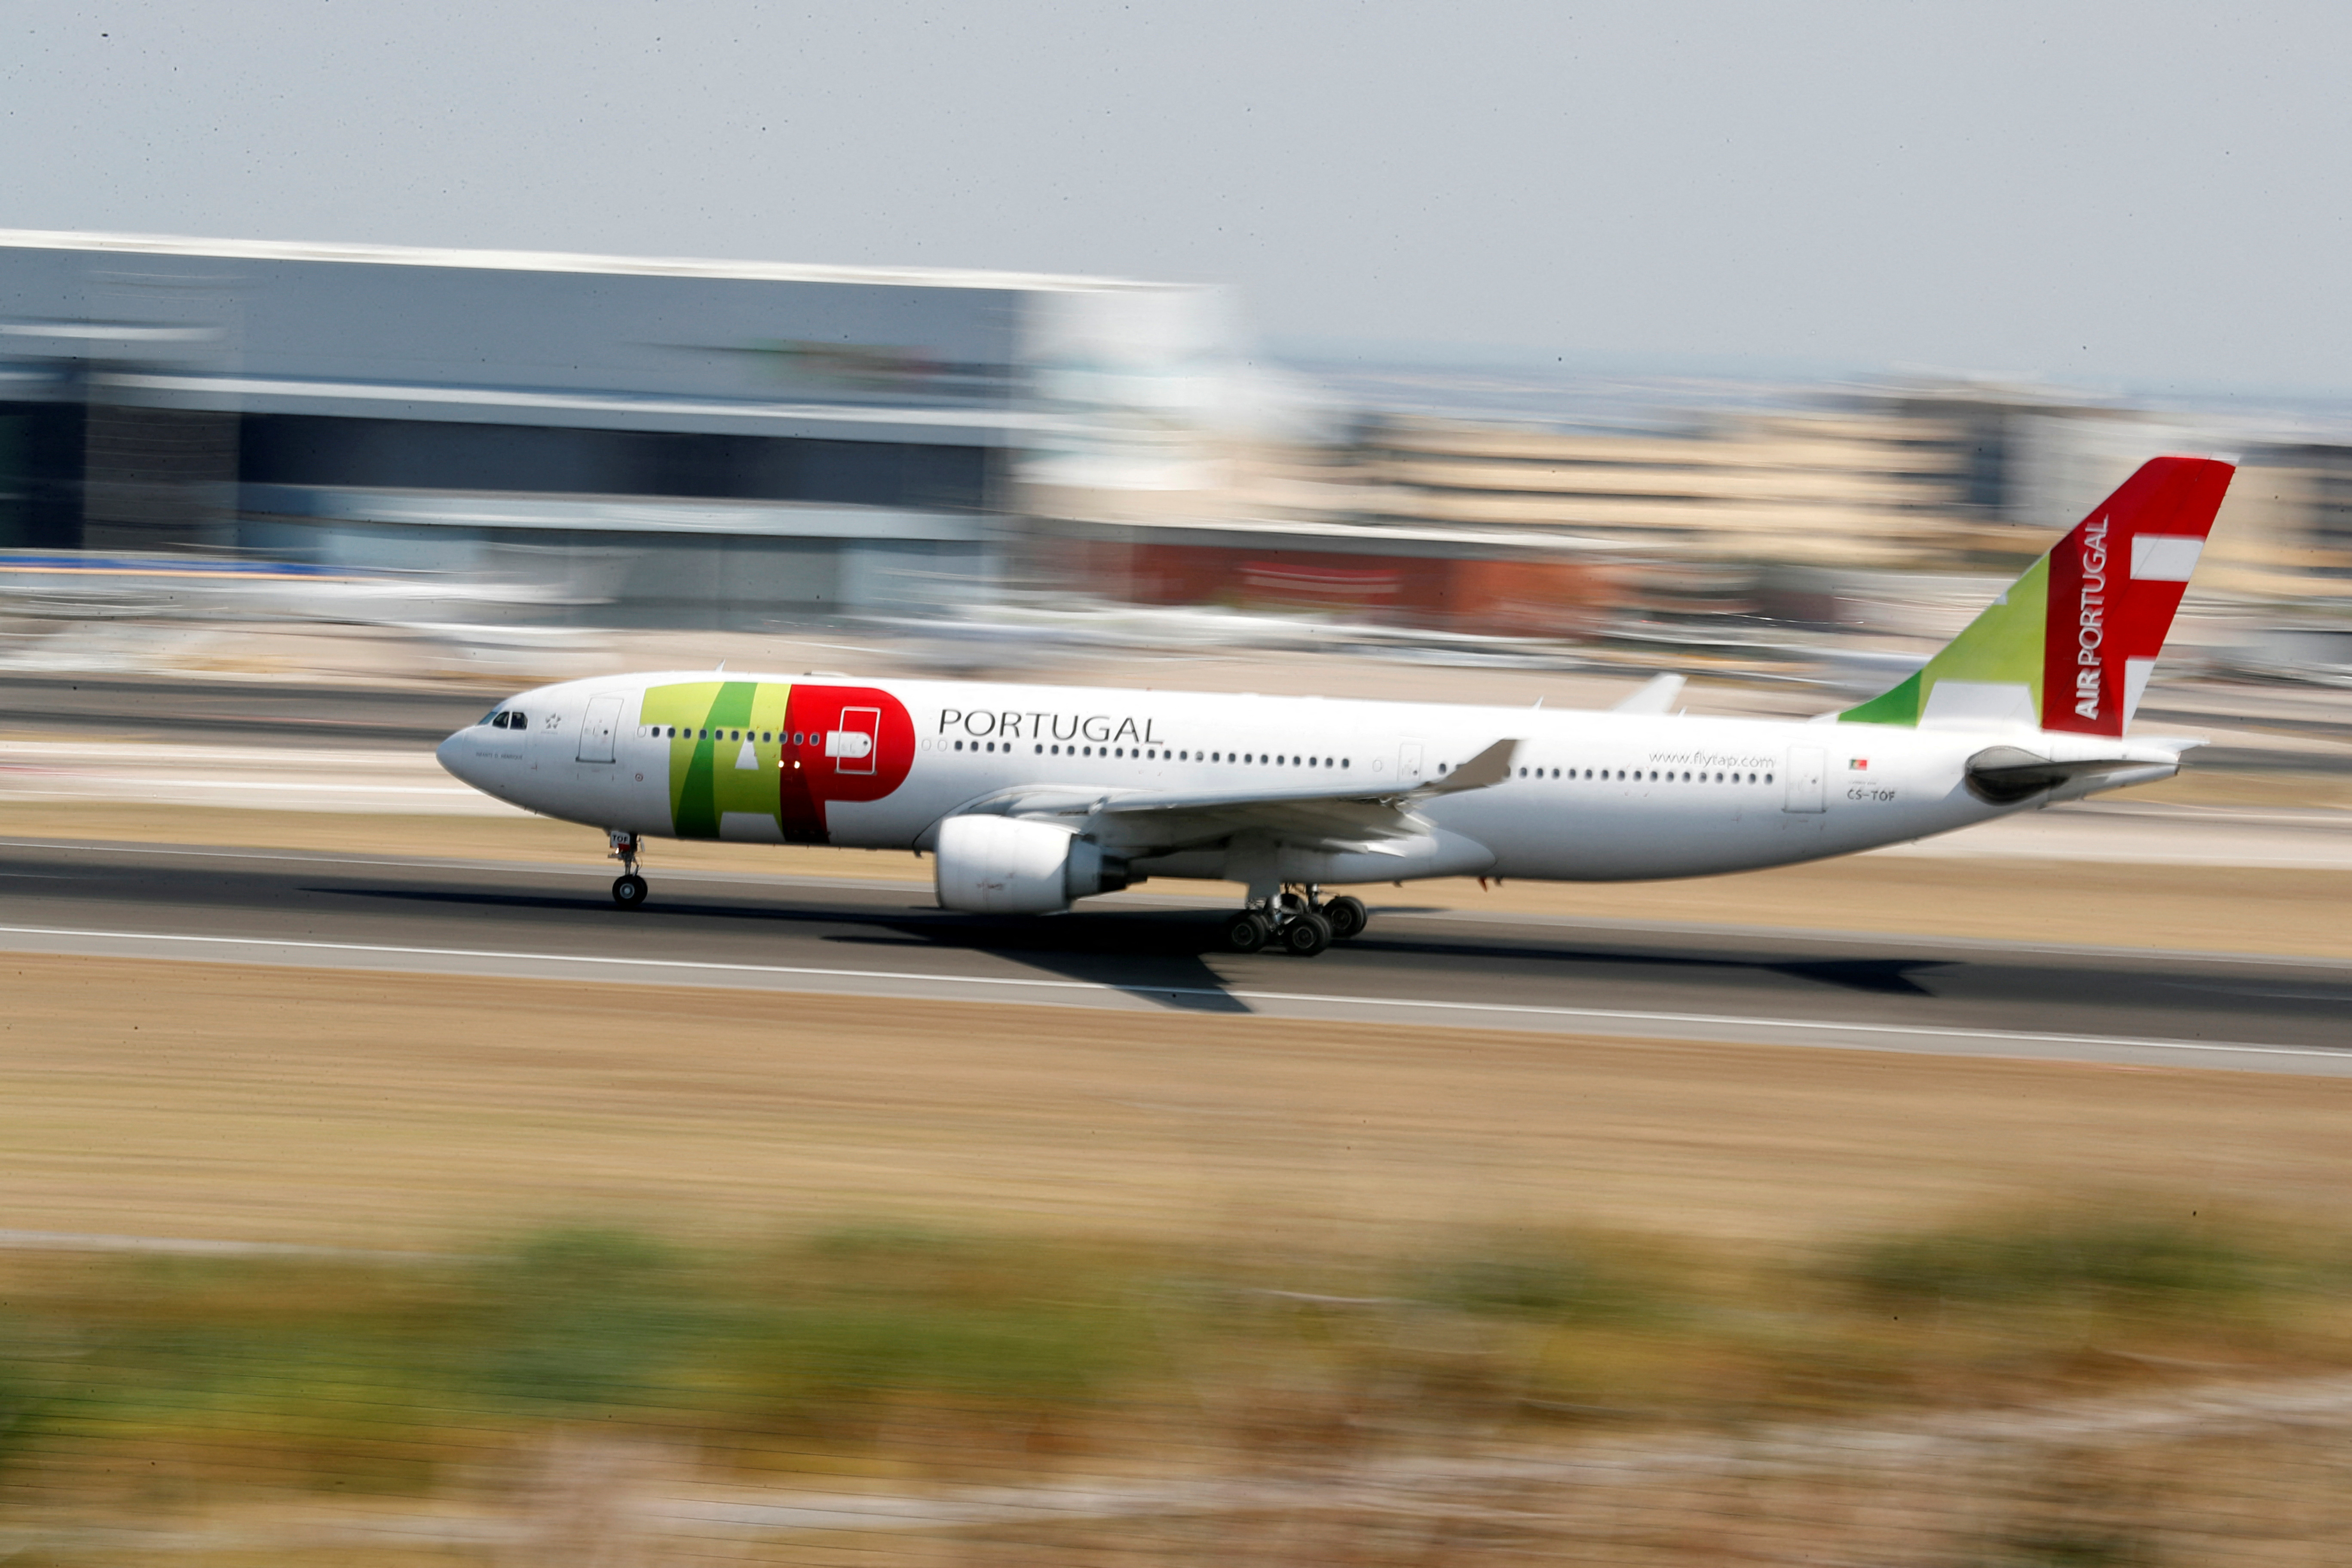 A TAP Air Portugal Airbus A330 plane lands at Lisbon's airport